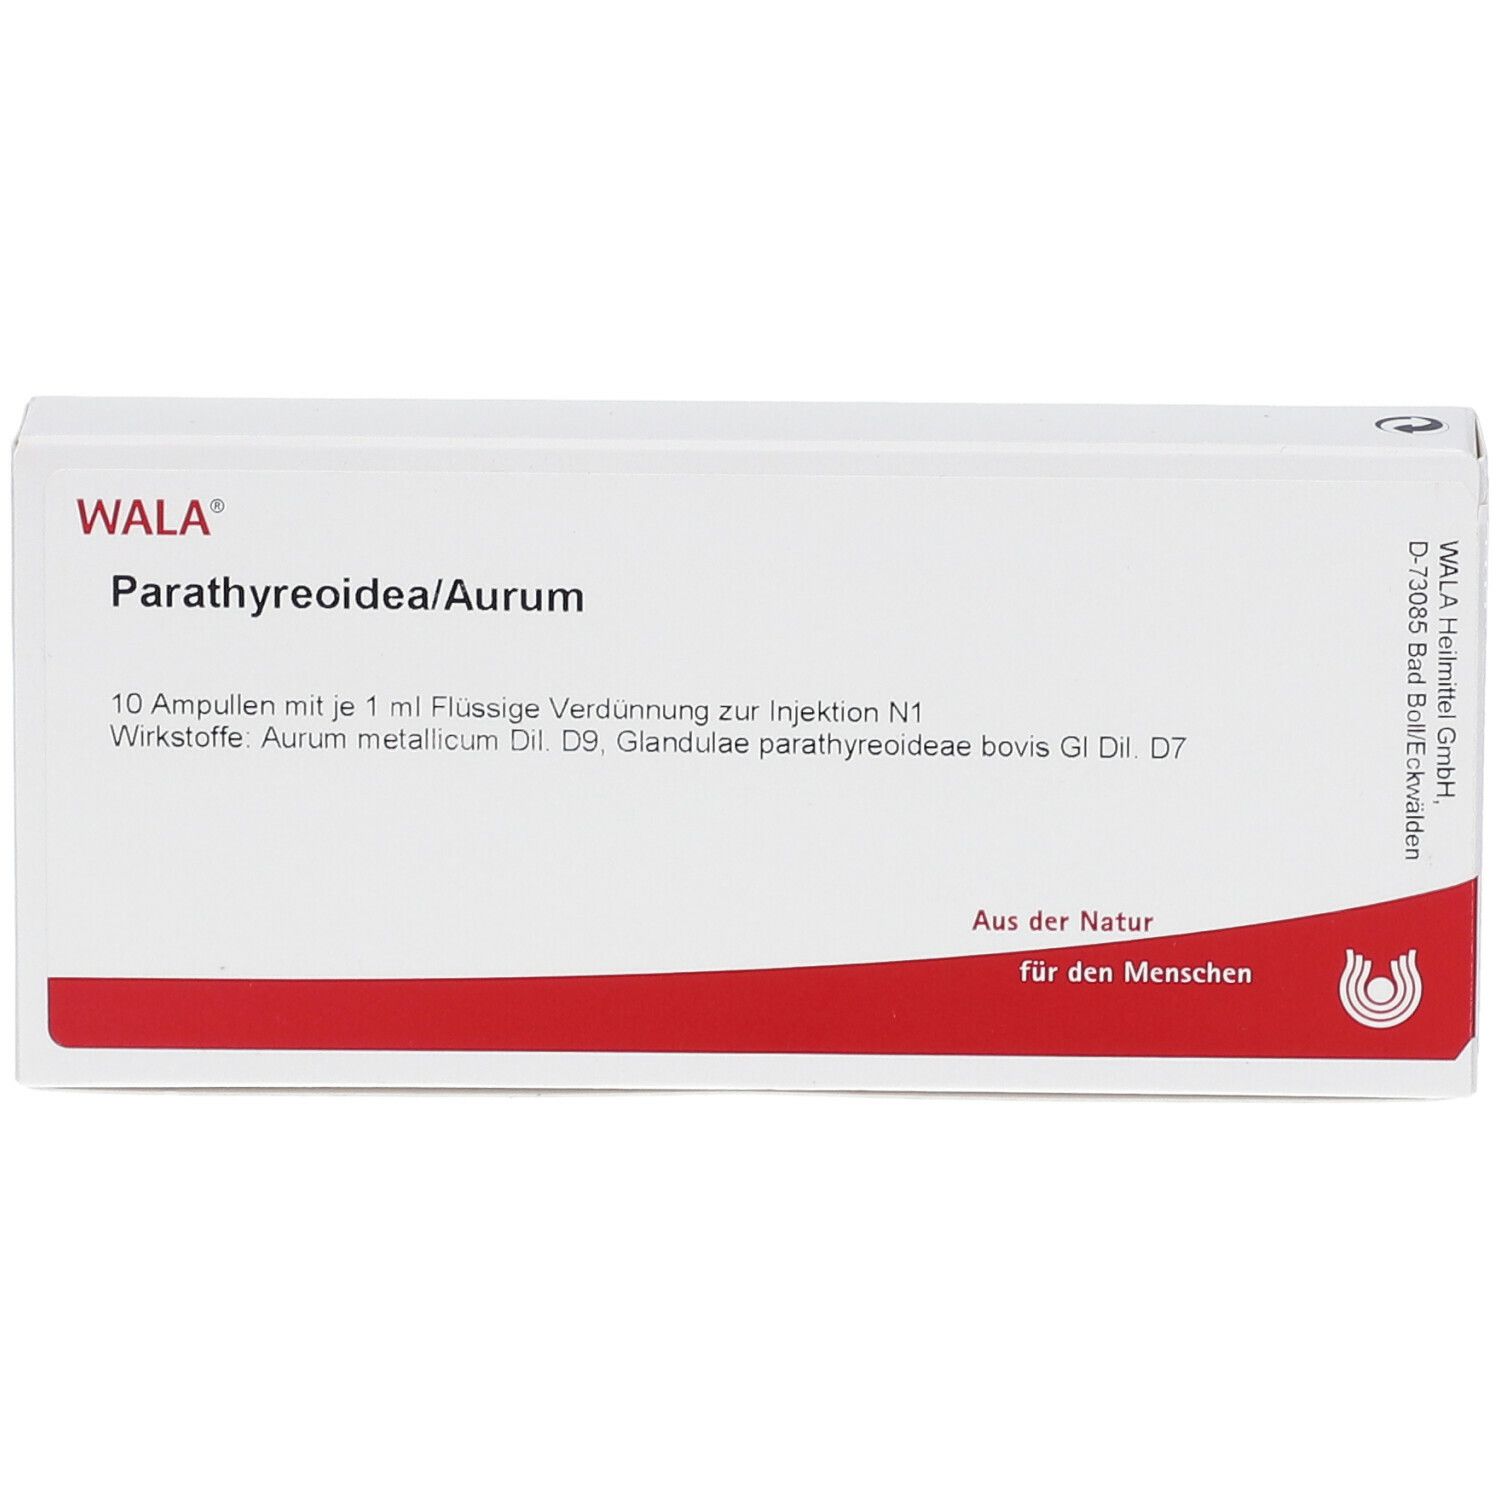 WALA® PARATHYREOIDEA/ Aurum Amp.